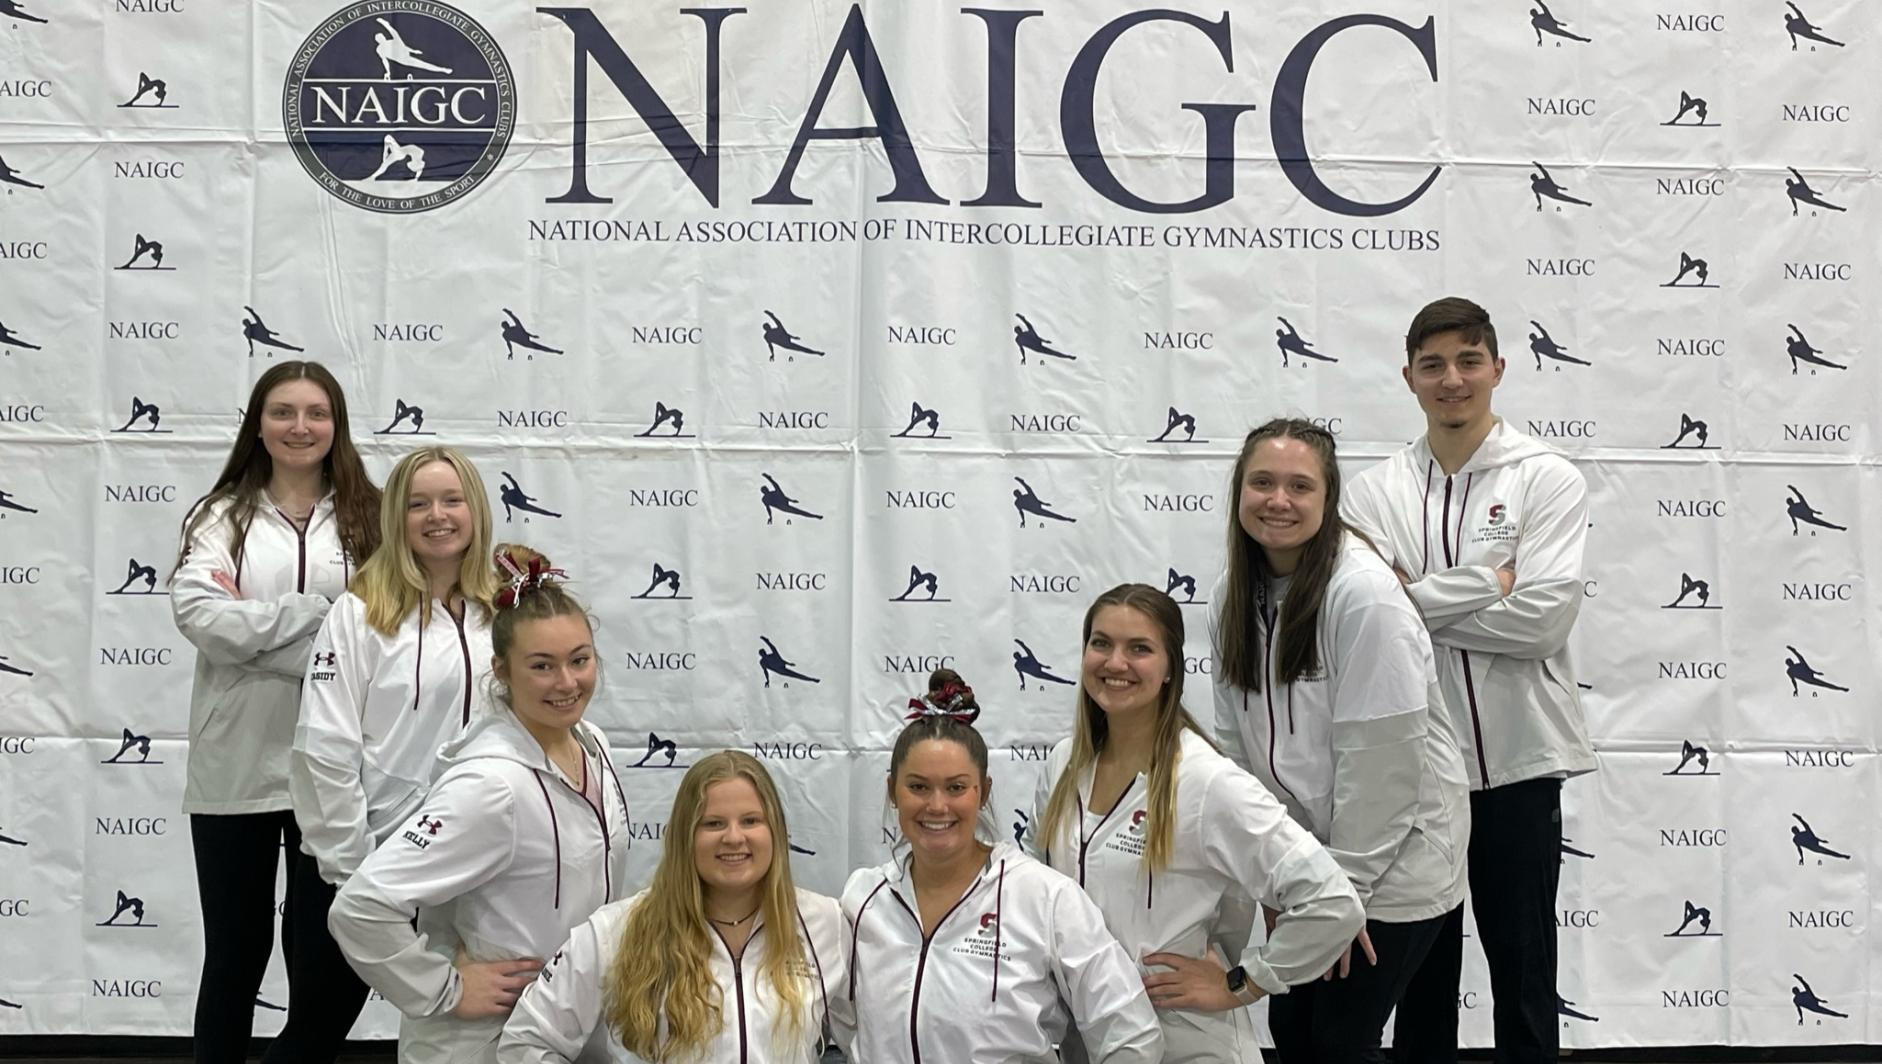 NAIGC Group Photo